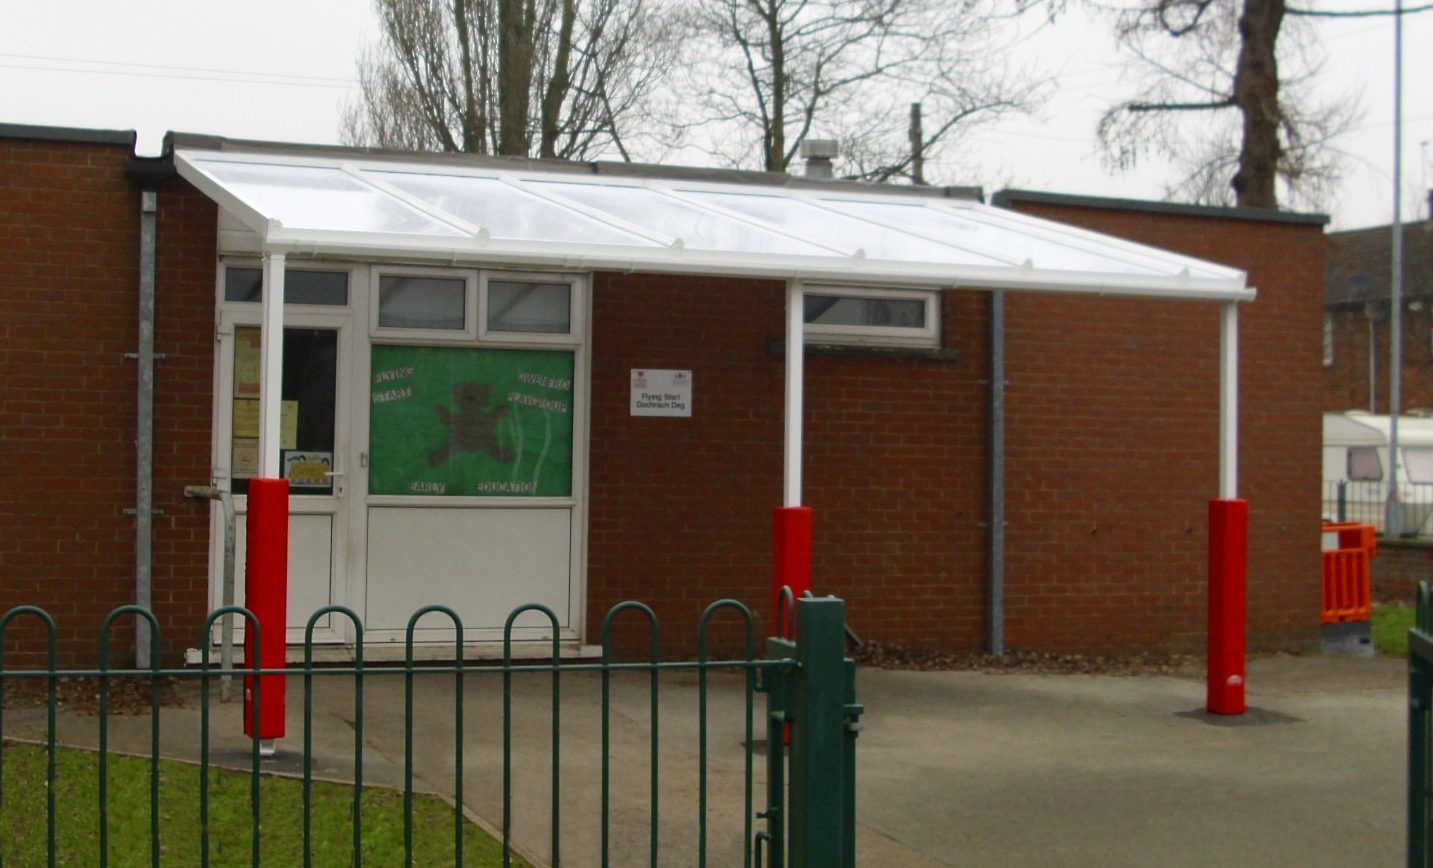 Gwenfro Community Primary School